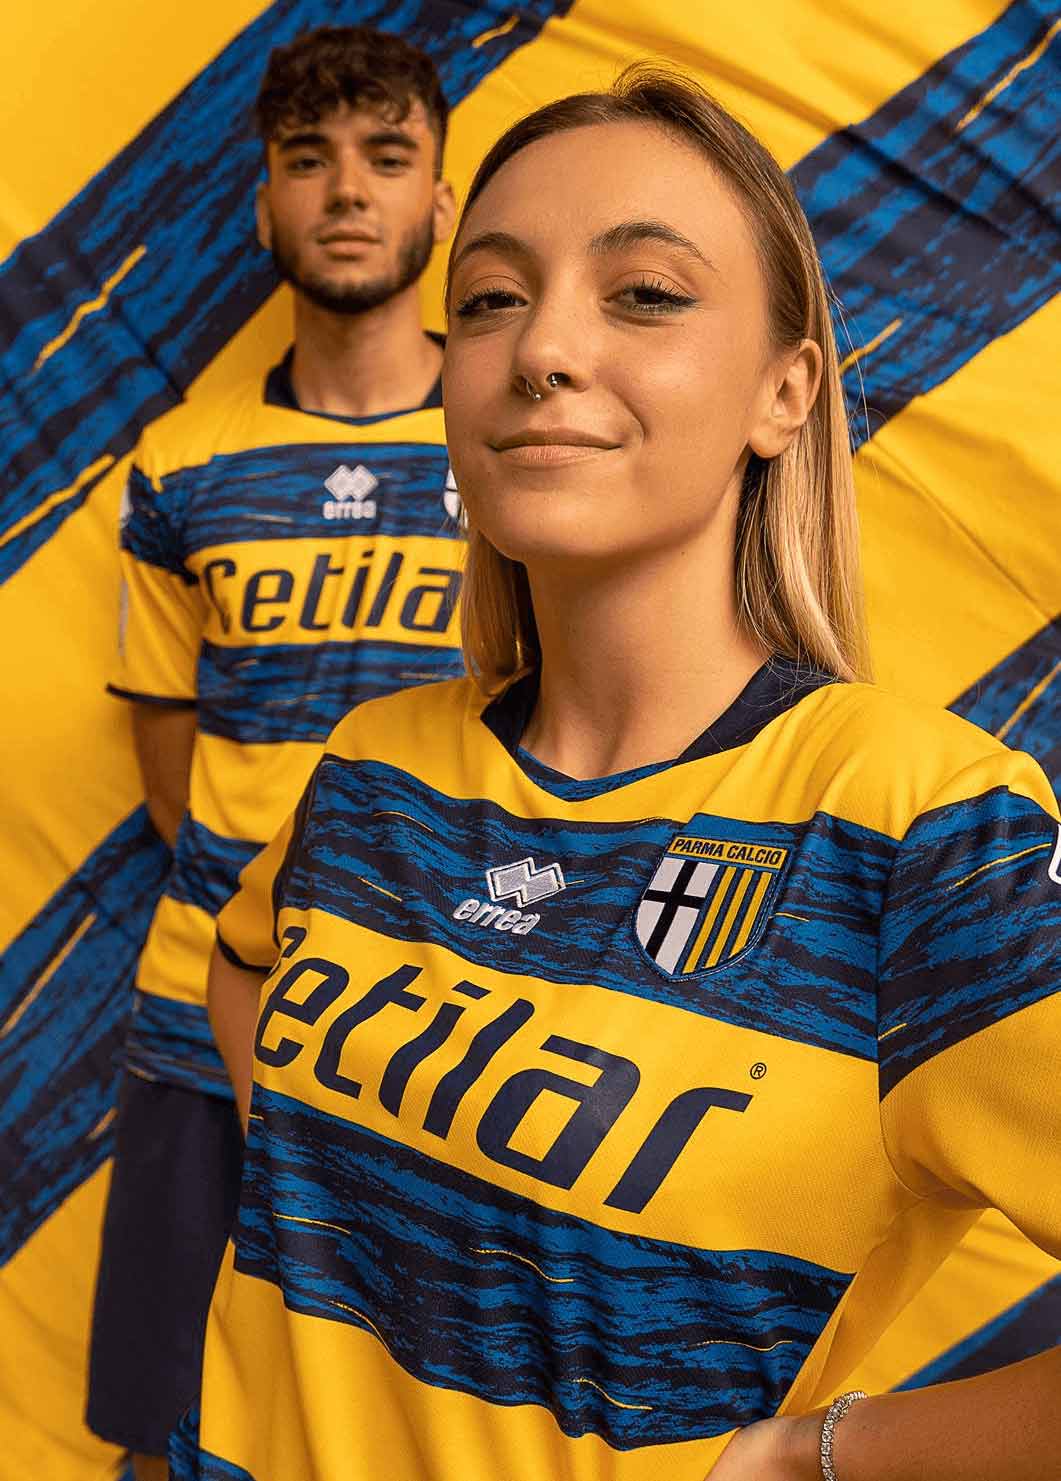 new Parma Calcio away jersey